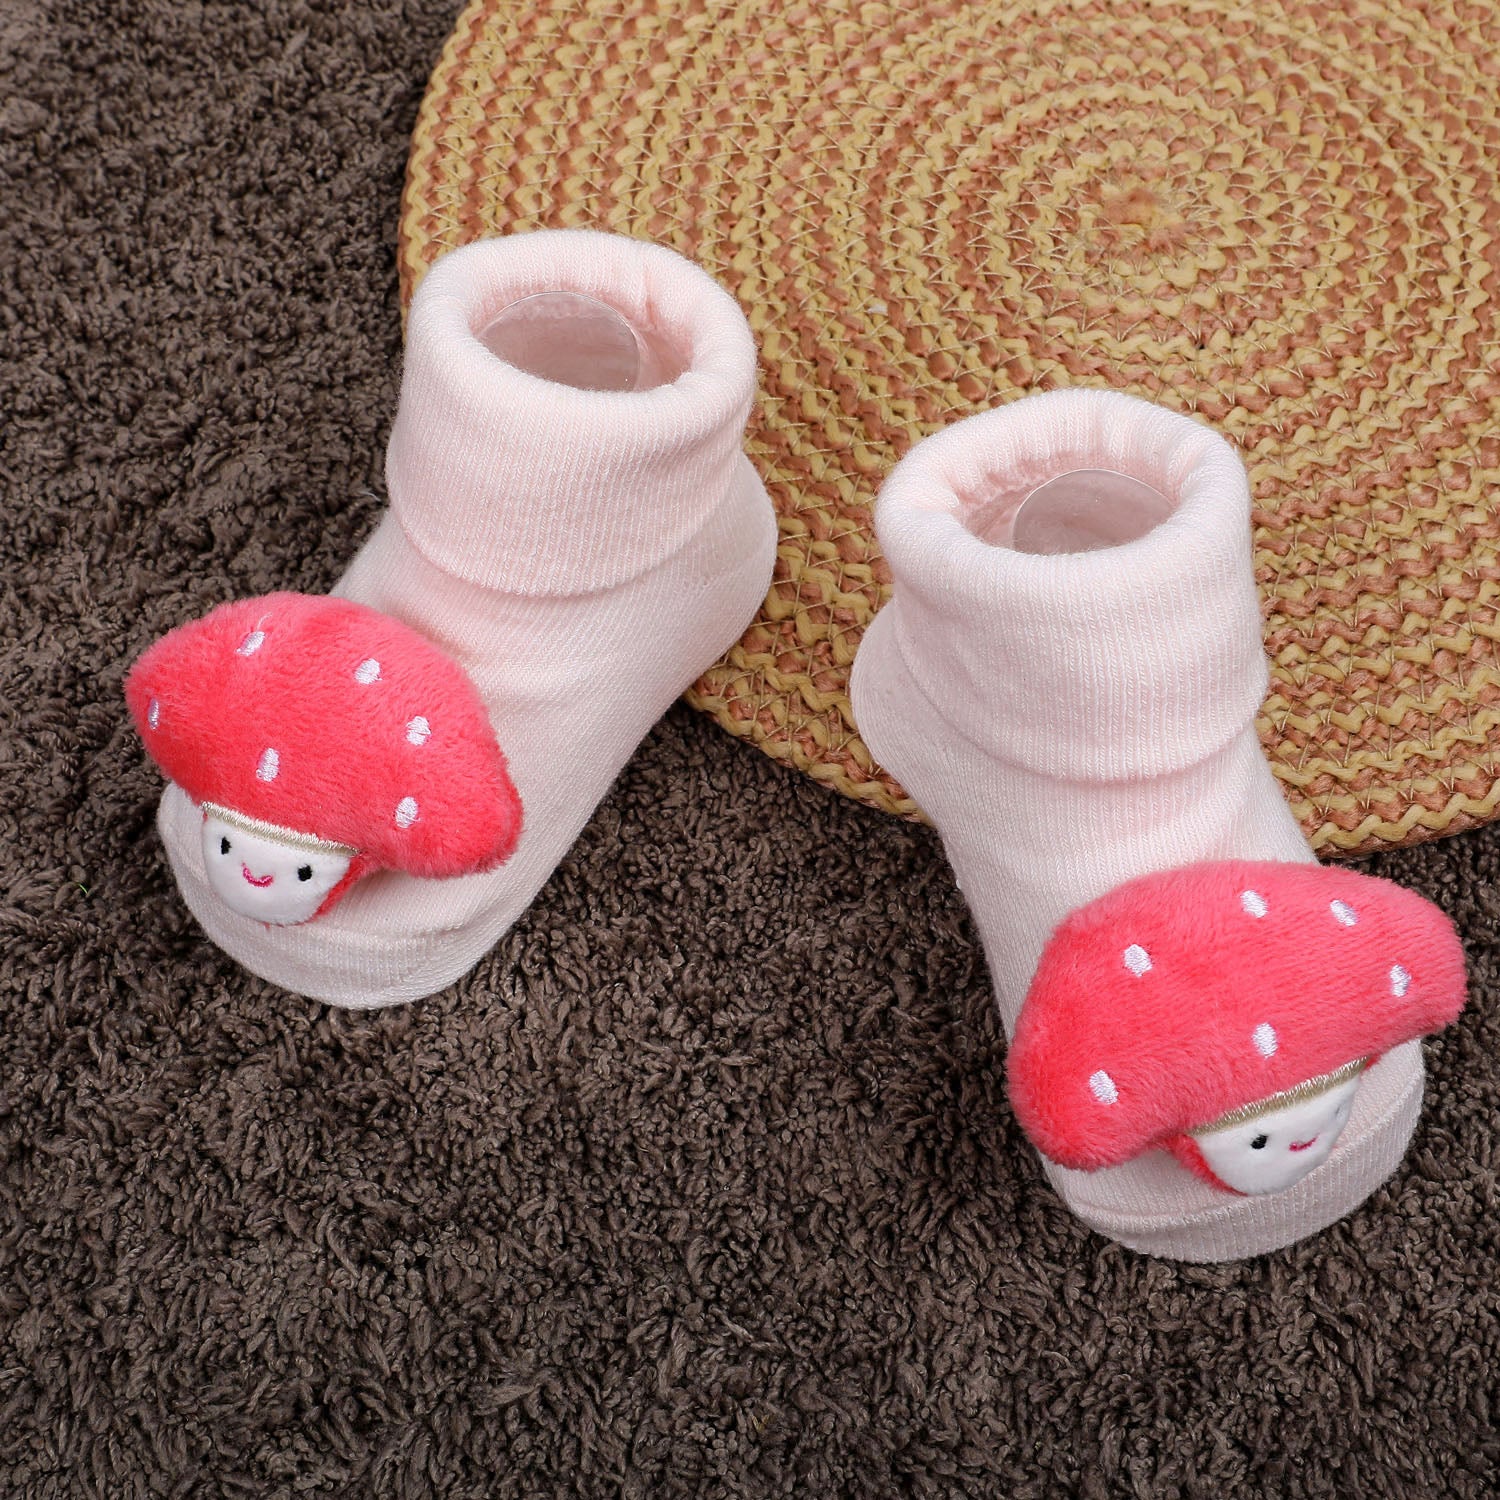 Baby Moo Mushroom Cotton Anti-Skid 3D Socks - Pink - Baby Moo